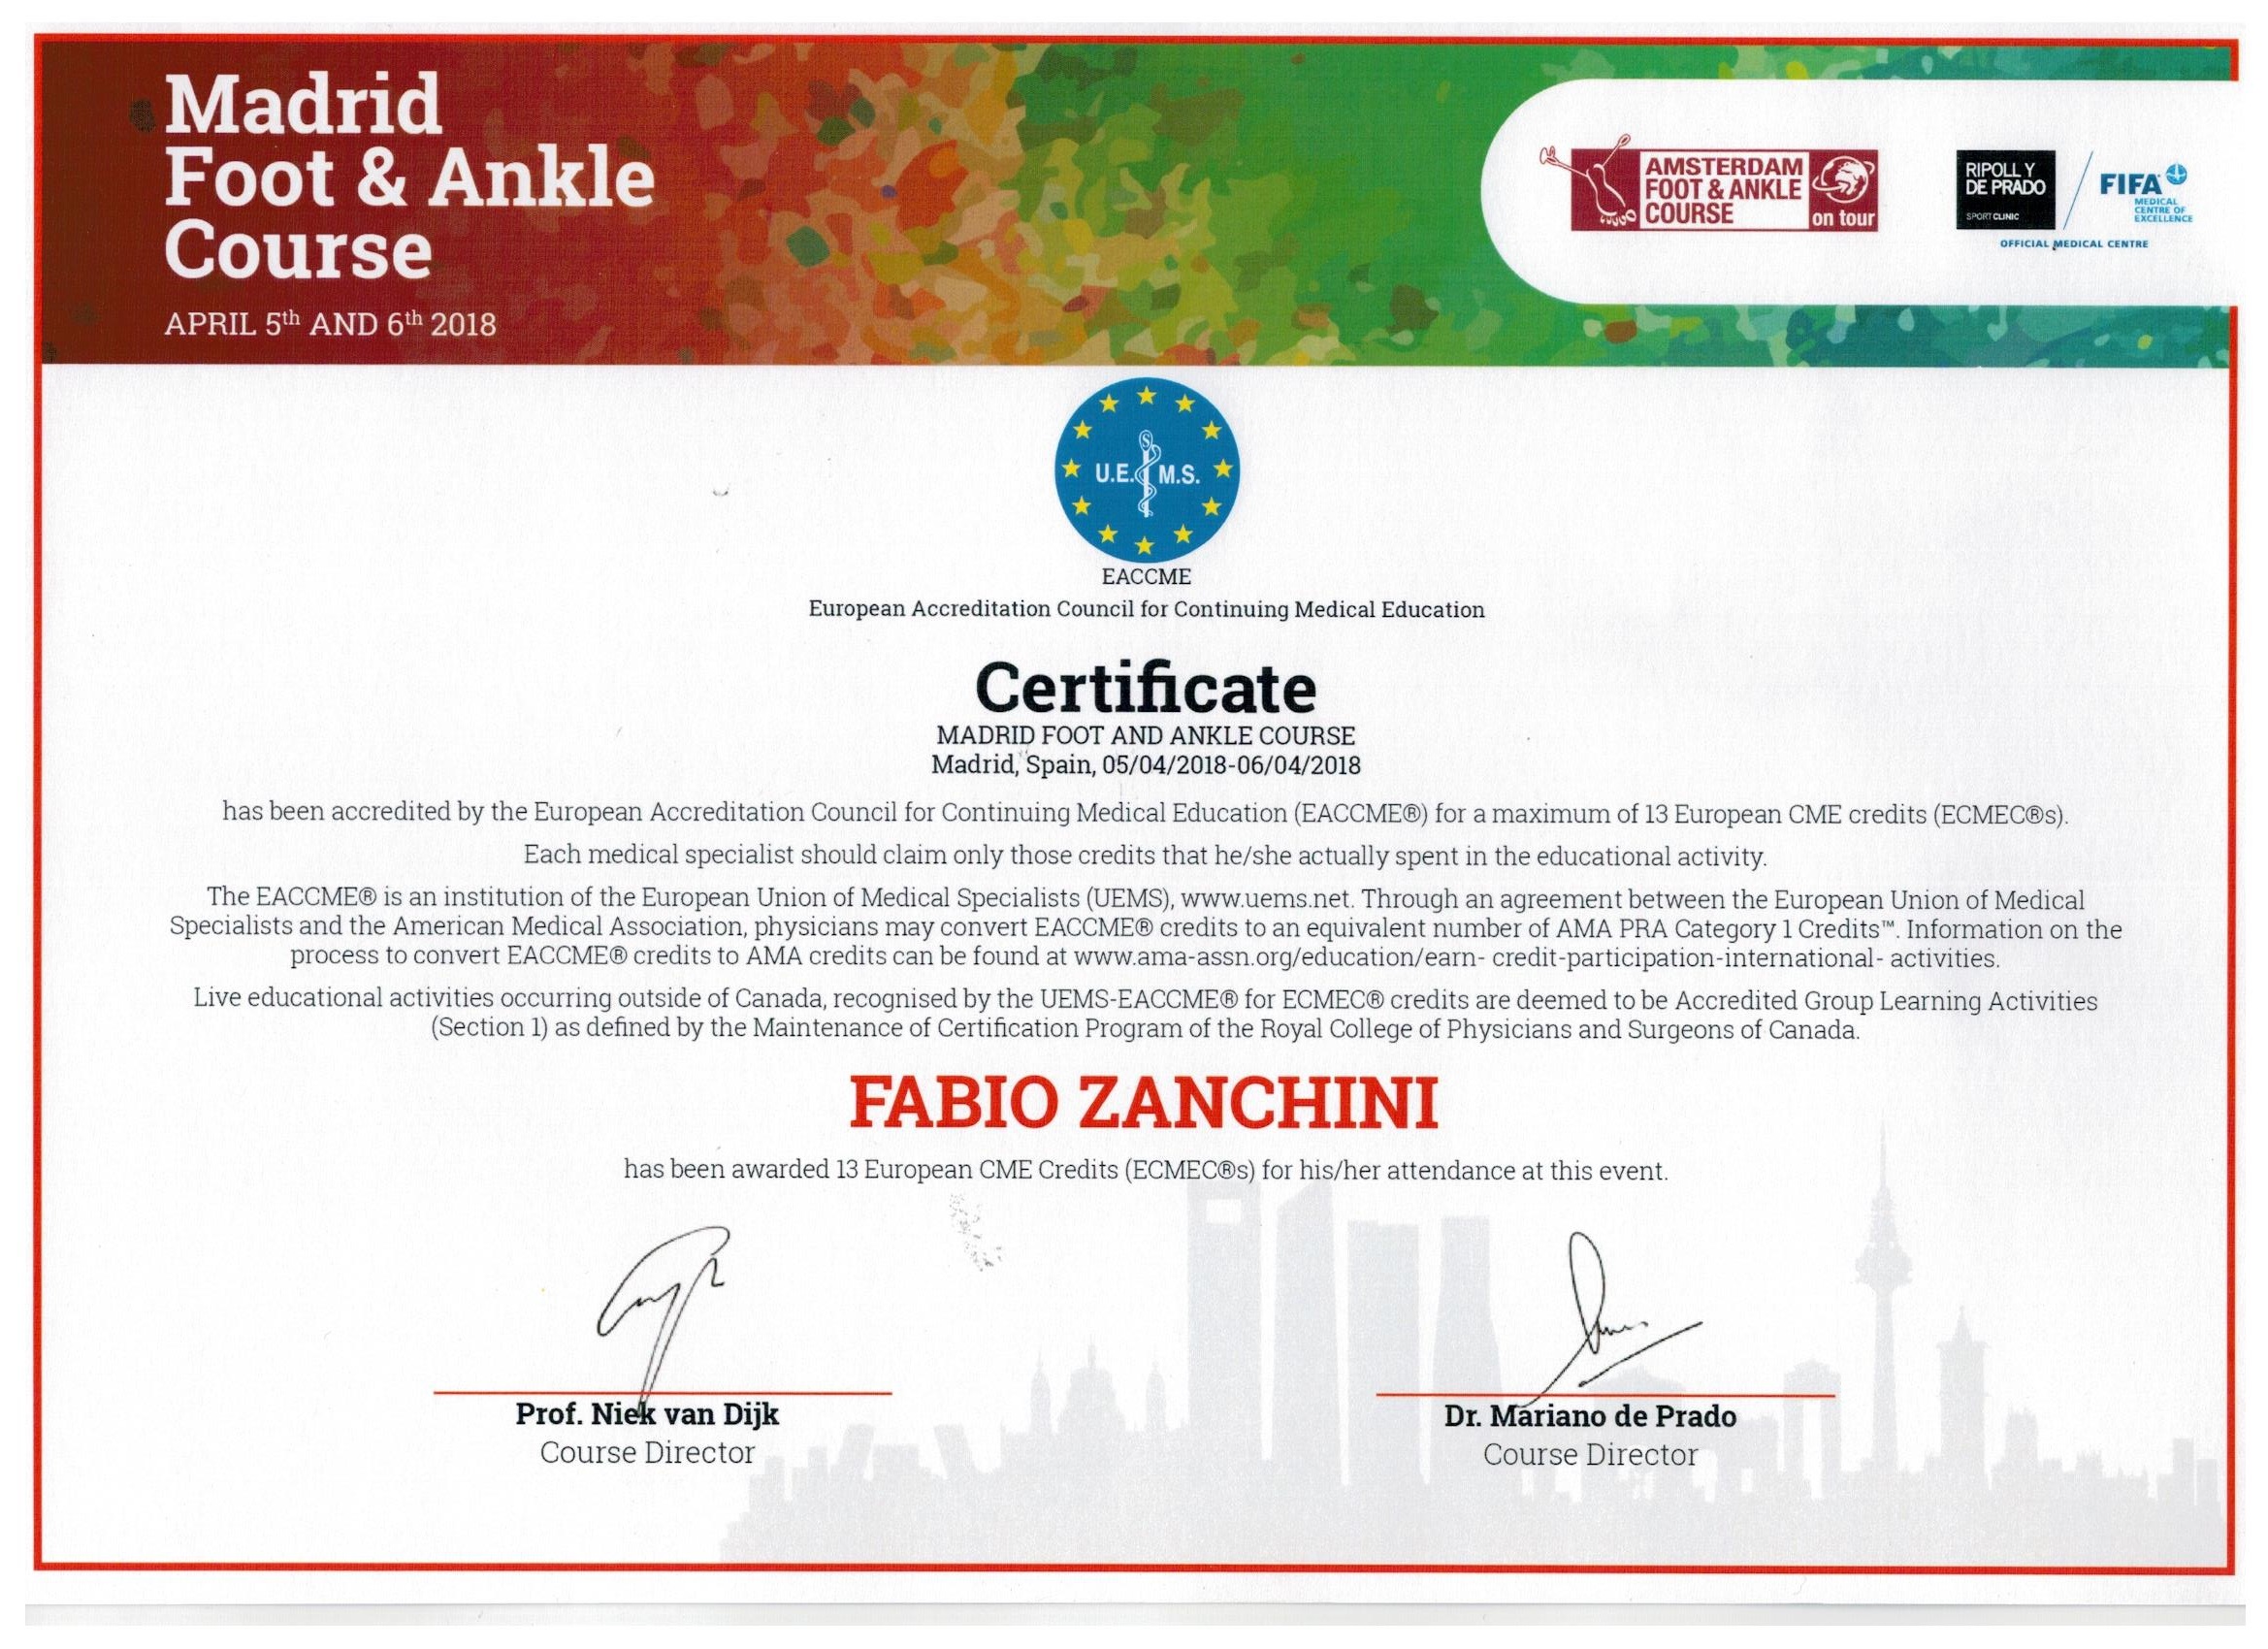 Prof Dott fabio zanchini - certificate madride foot and ankle course - Spain